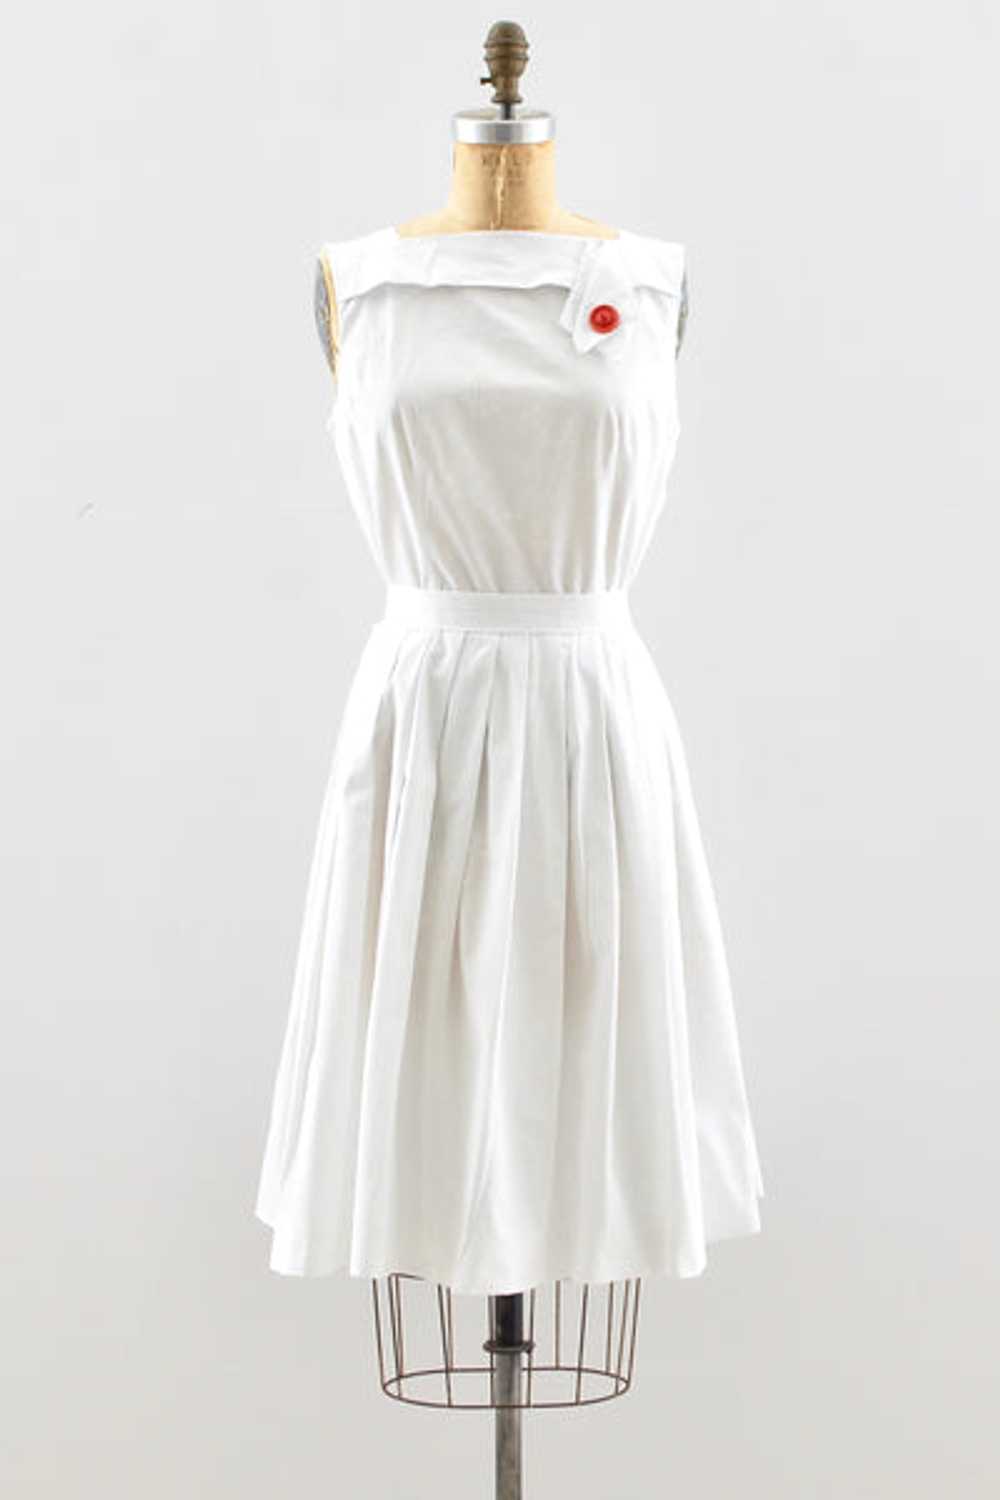 50's White Dress - image 1